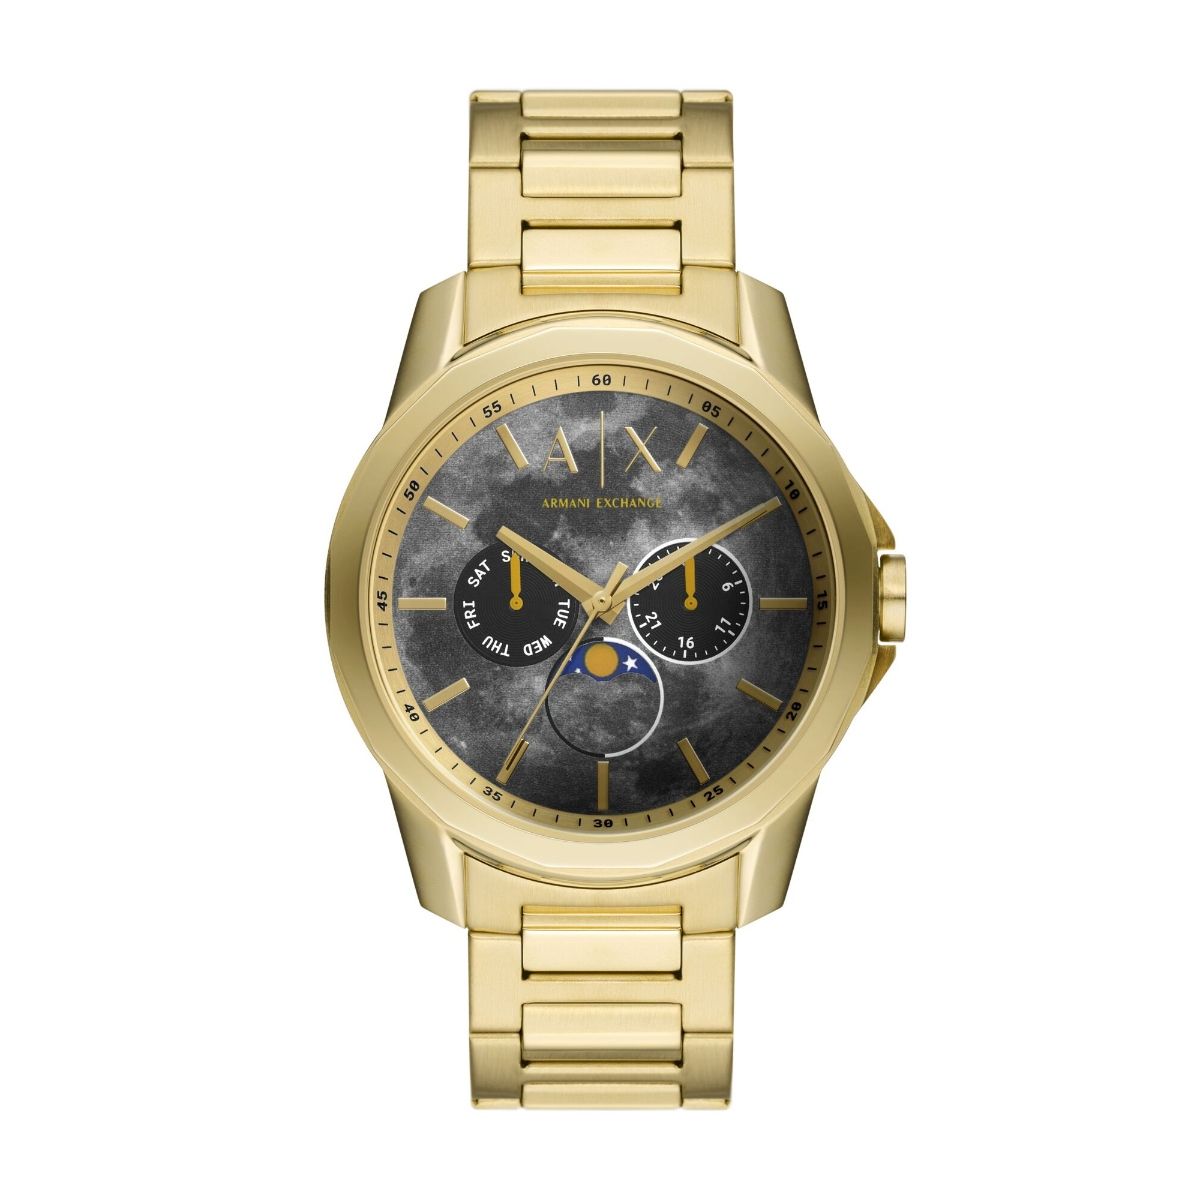 ARMANI EXCHANGE Gold Watch AX1737: Buy ARMANI EXCHANGE Gold Watch ...